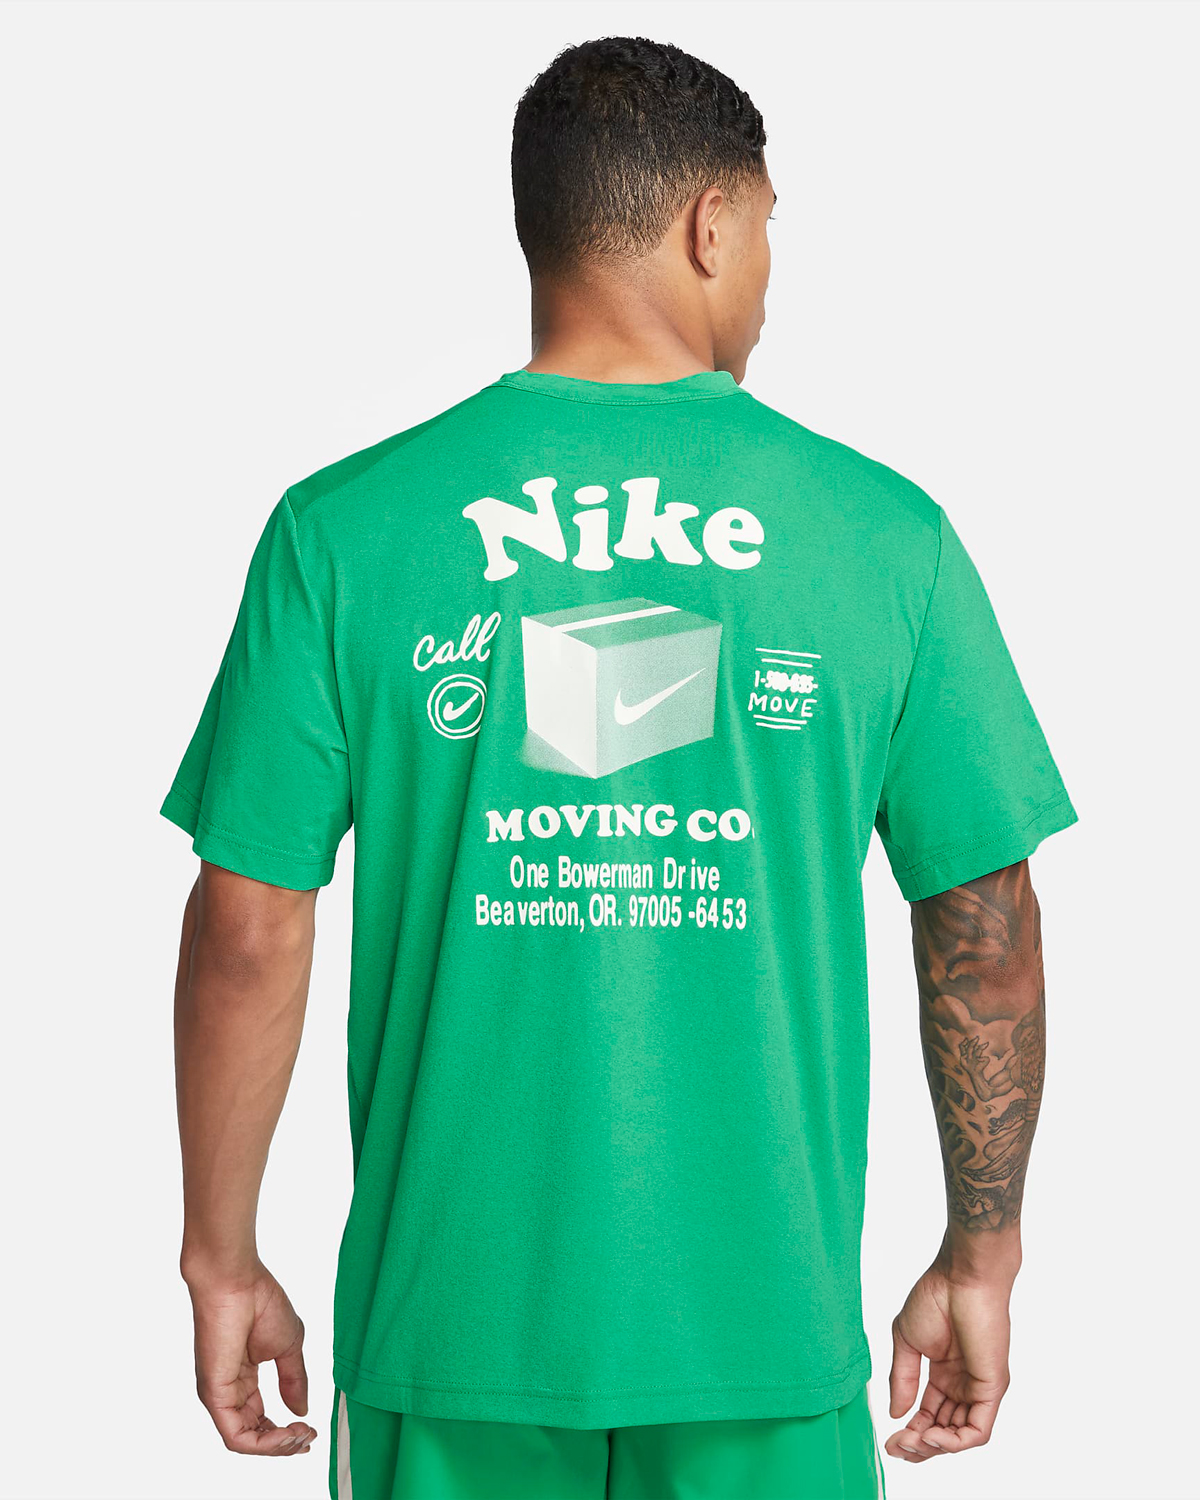 Nike-Stadium-Green-Moving-Co-T-Shirt-2